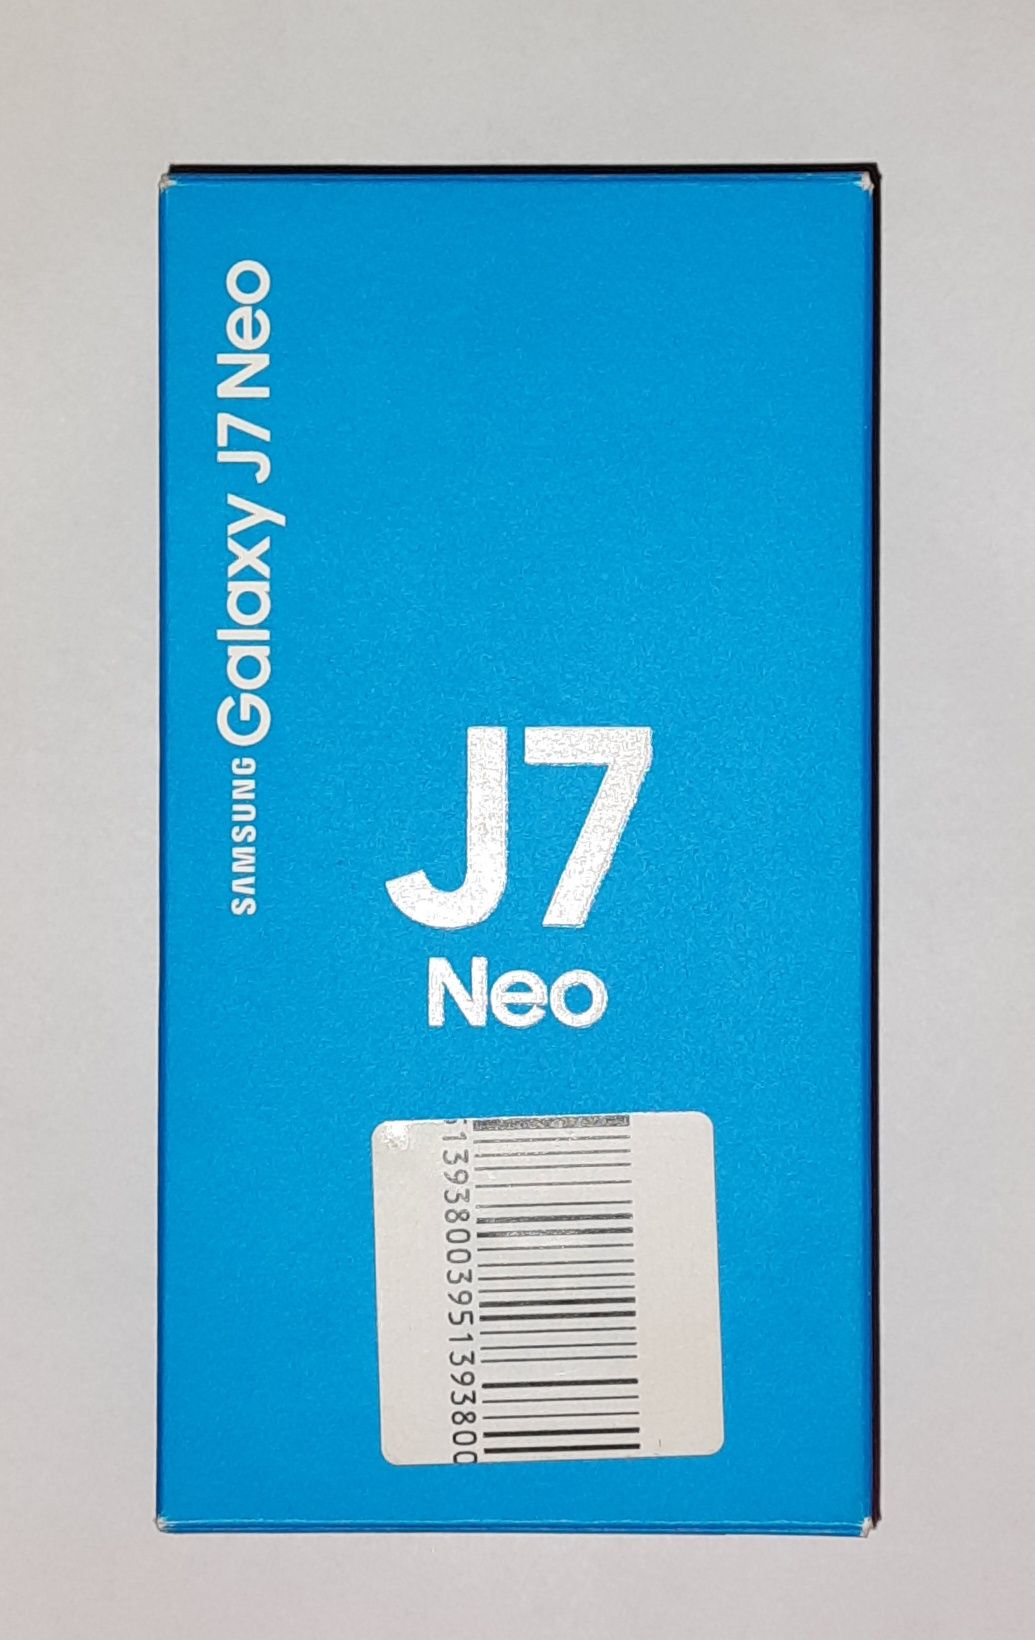 Продам Samsung Galaxy J7 Neo